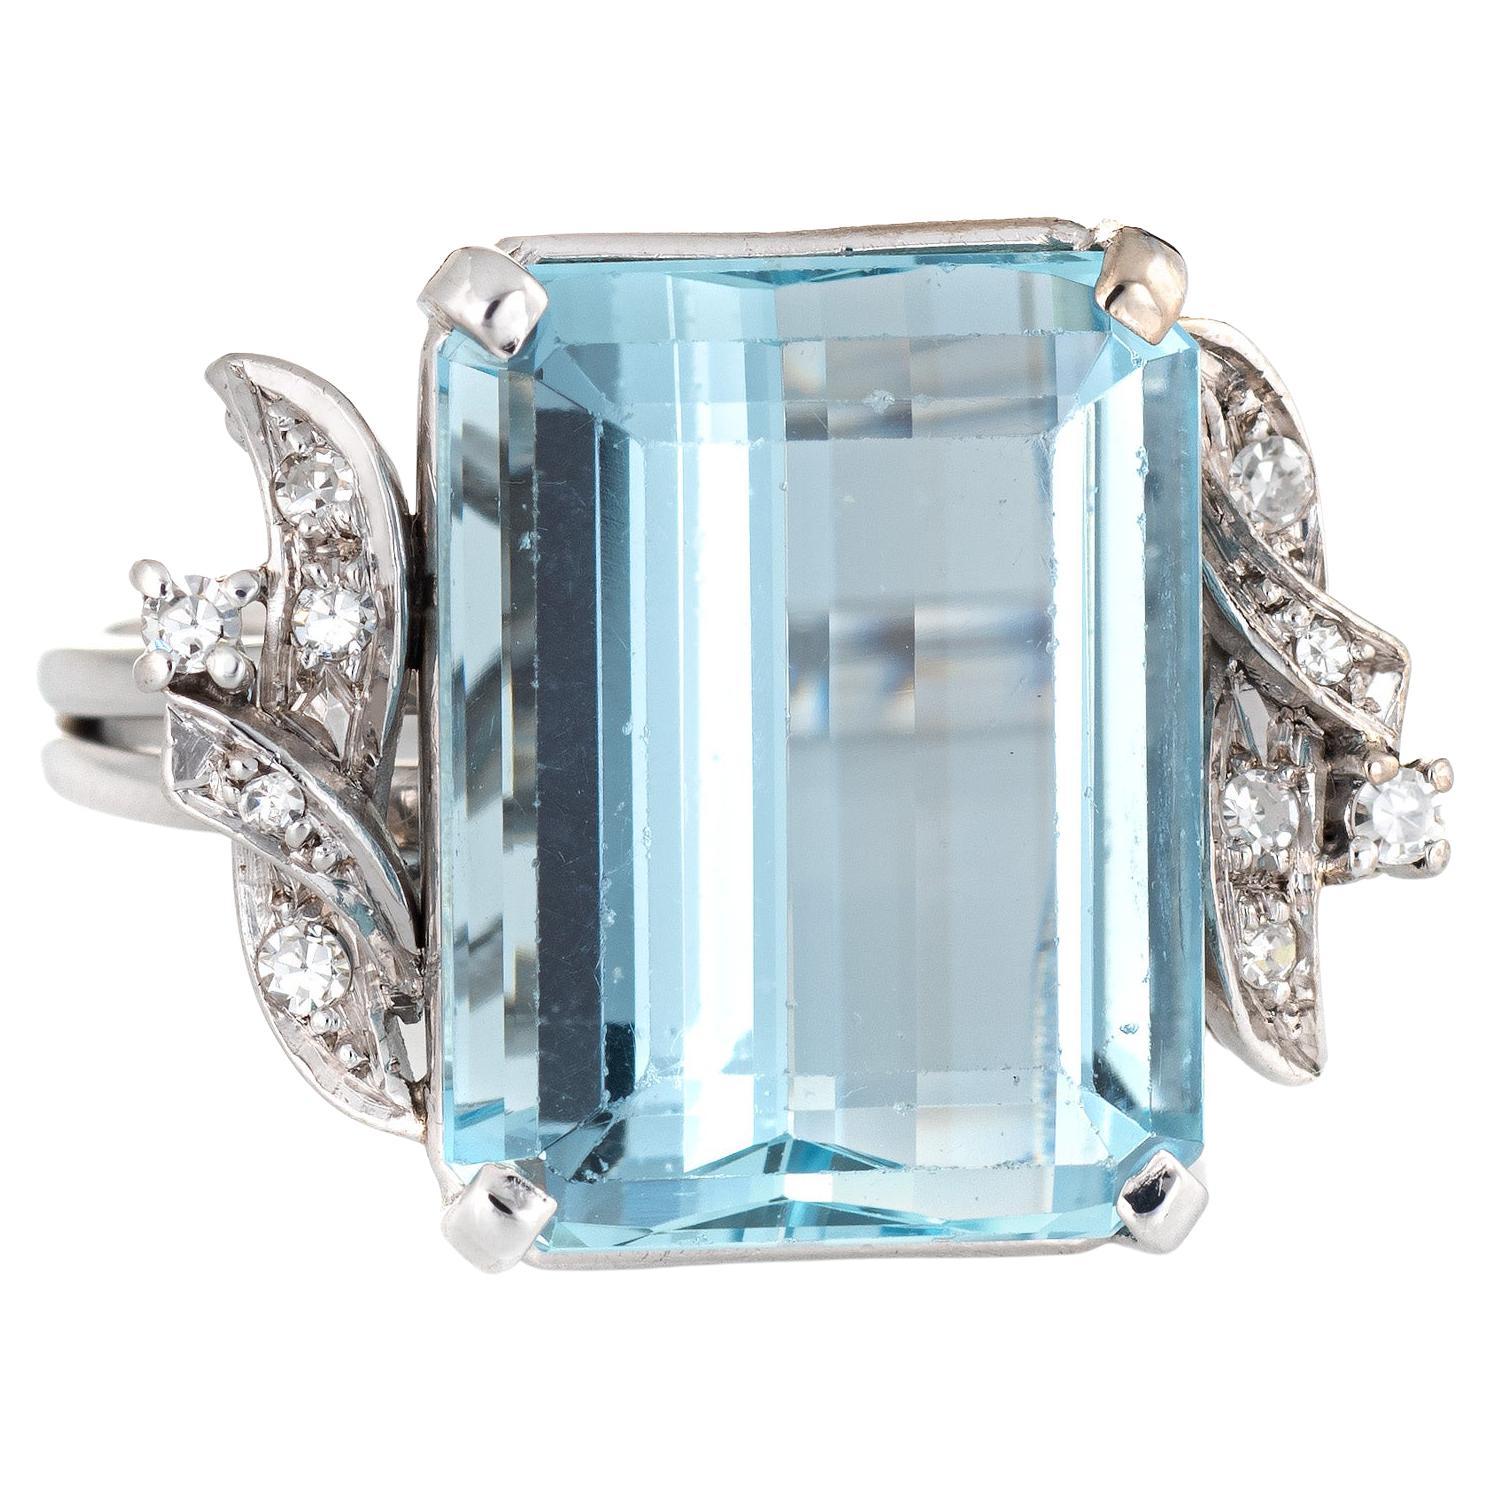 12ct Aquamarine Diamond Ring Vintage 18k White Gold Fine Cocktail Jewelry